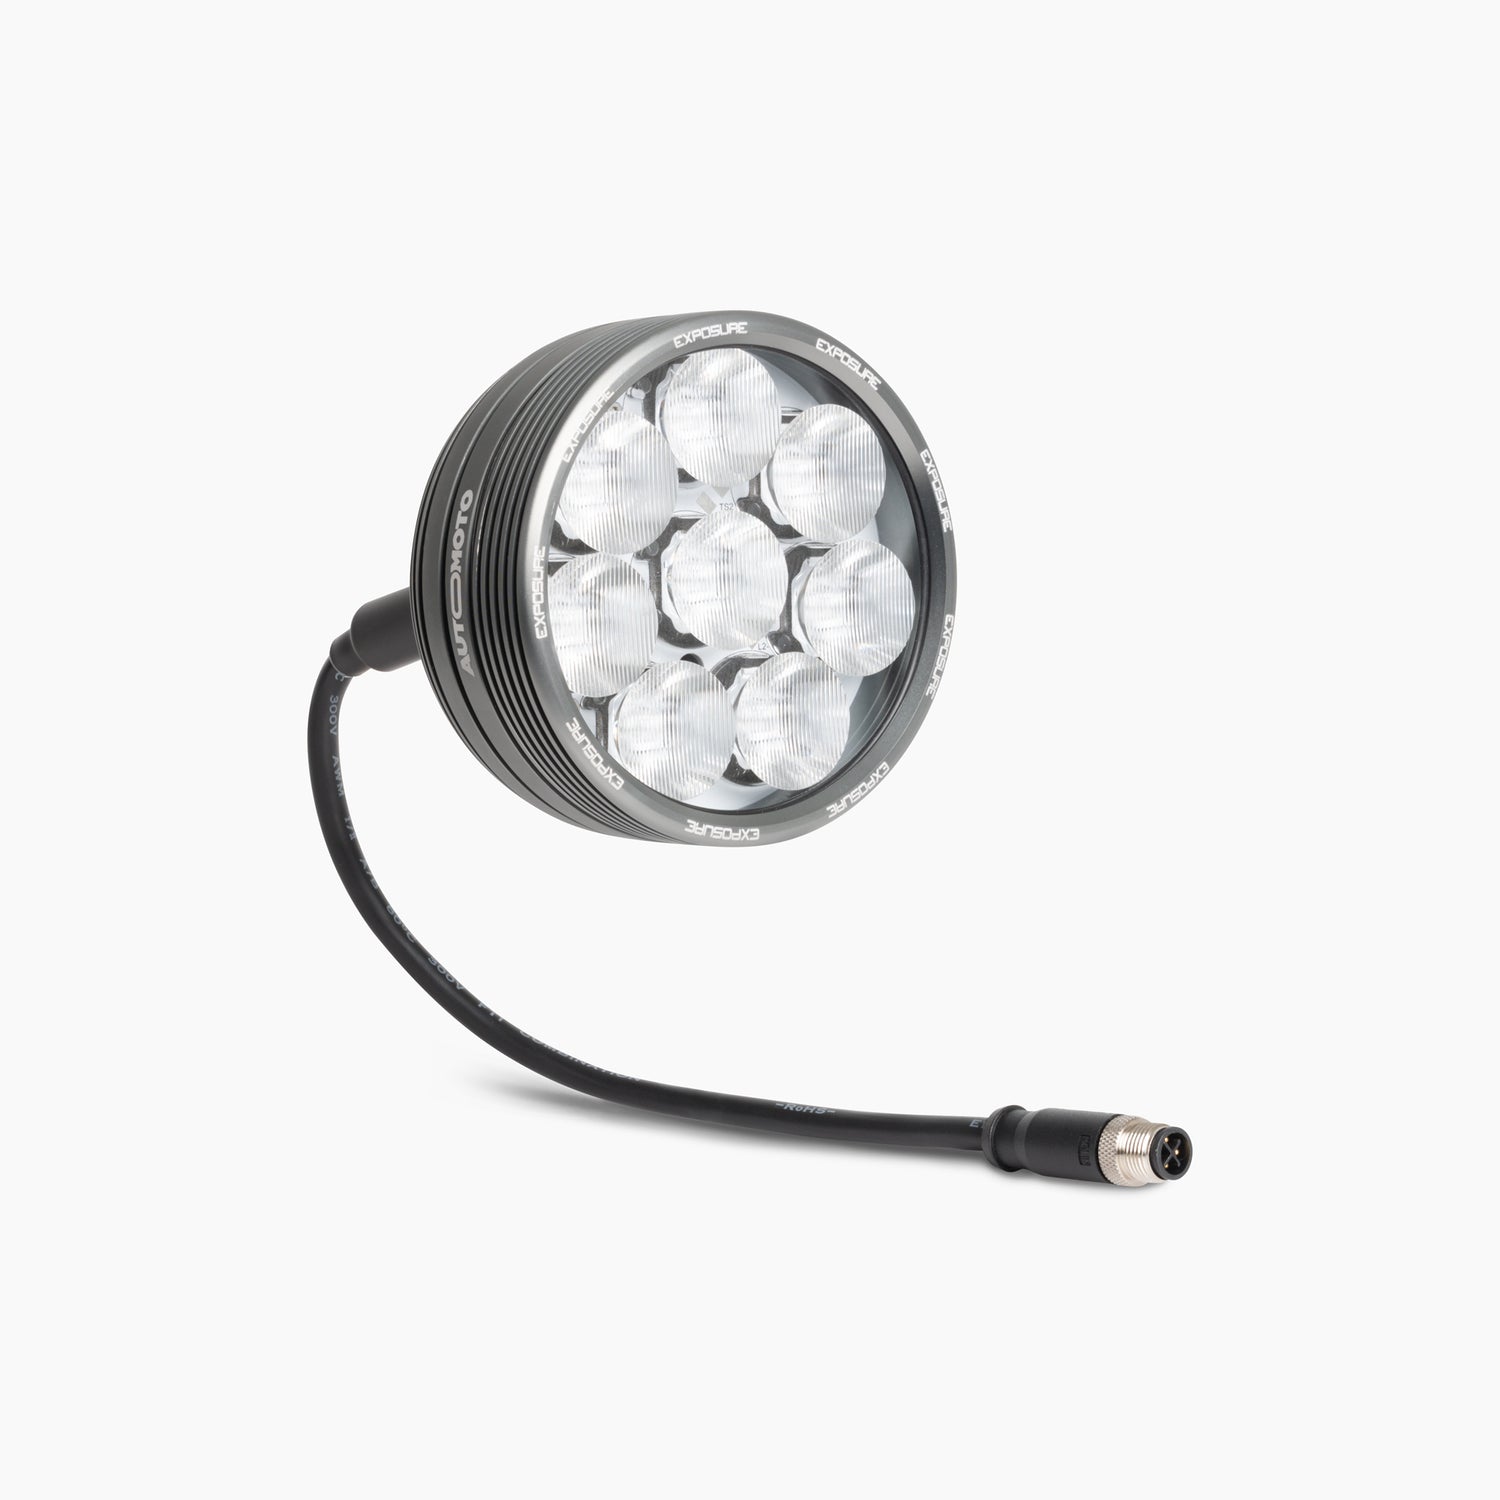 AutoMoto Radial 8 LED Light - 8 Wide Lenses